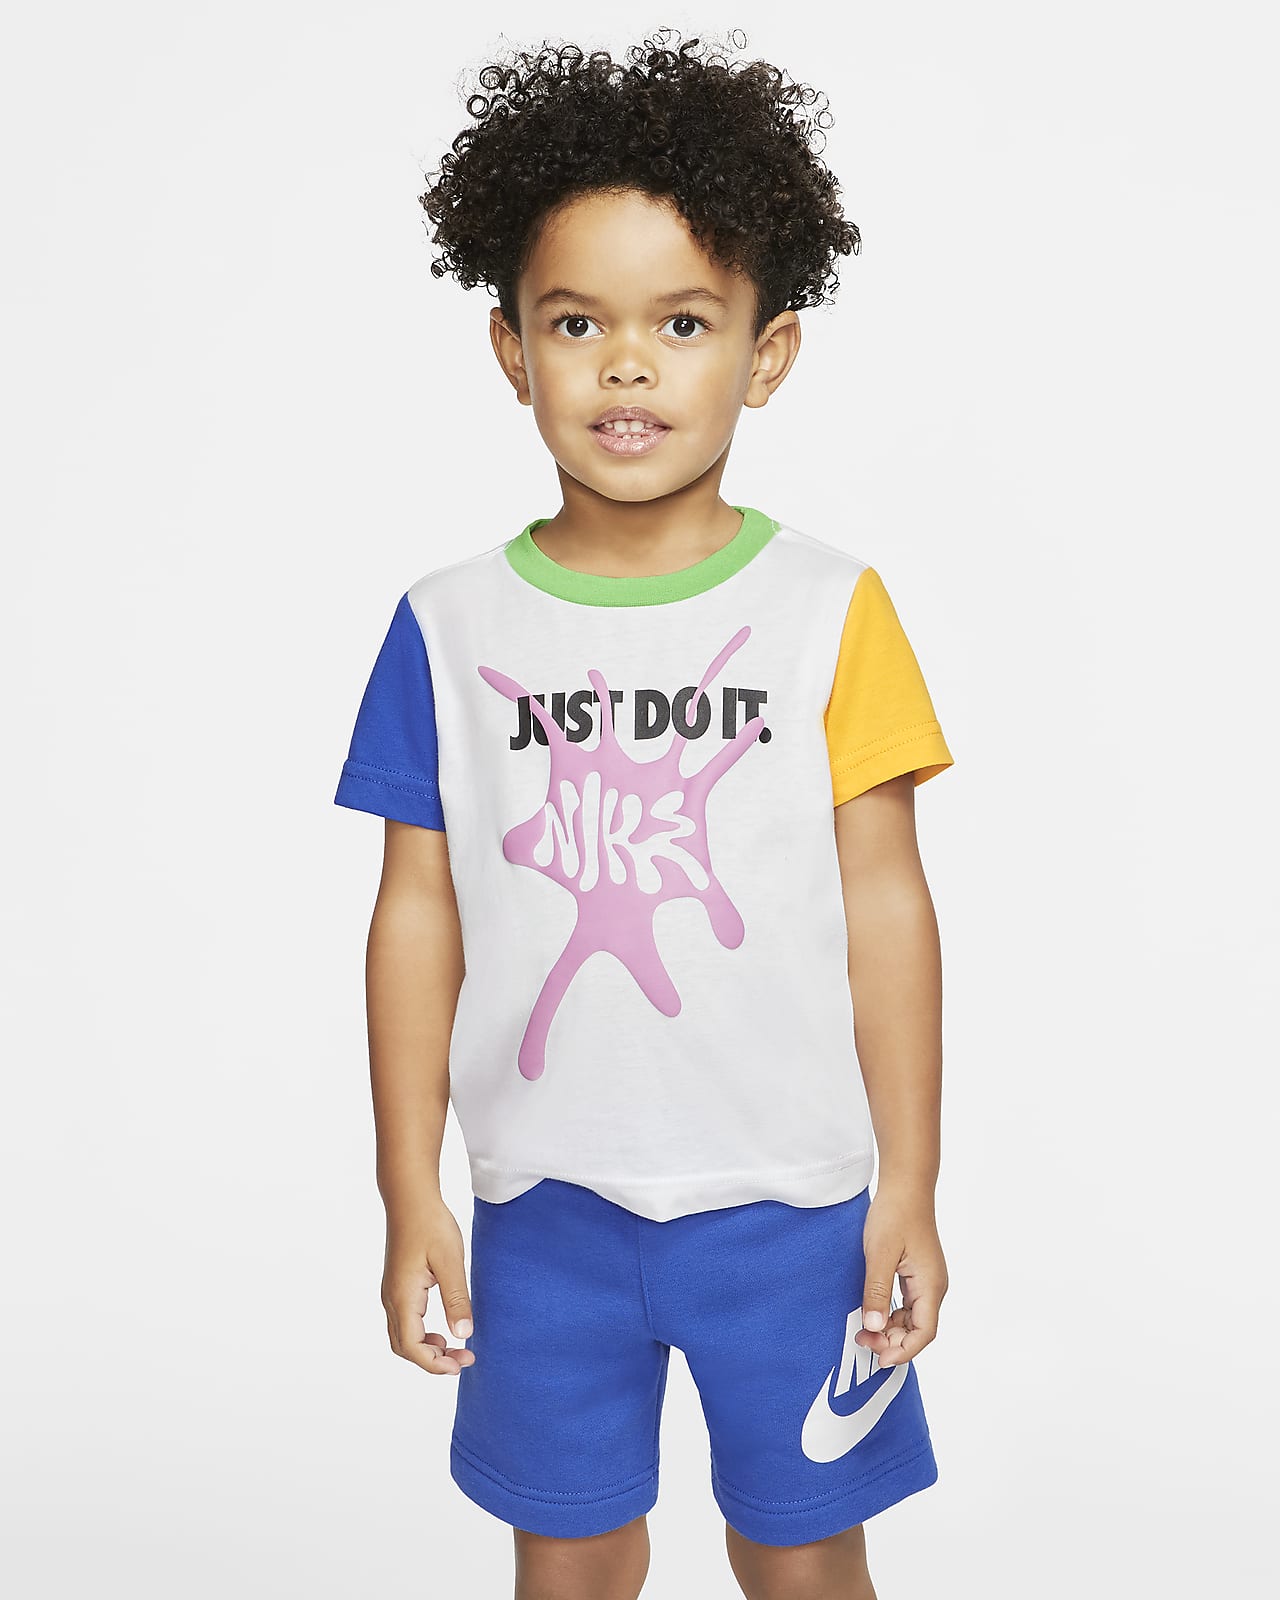 Nike Sportswear Toddler T-Shirt and Shorts Set